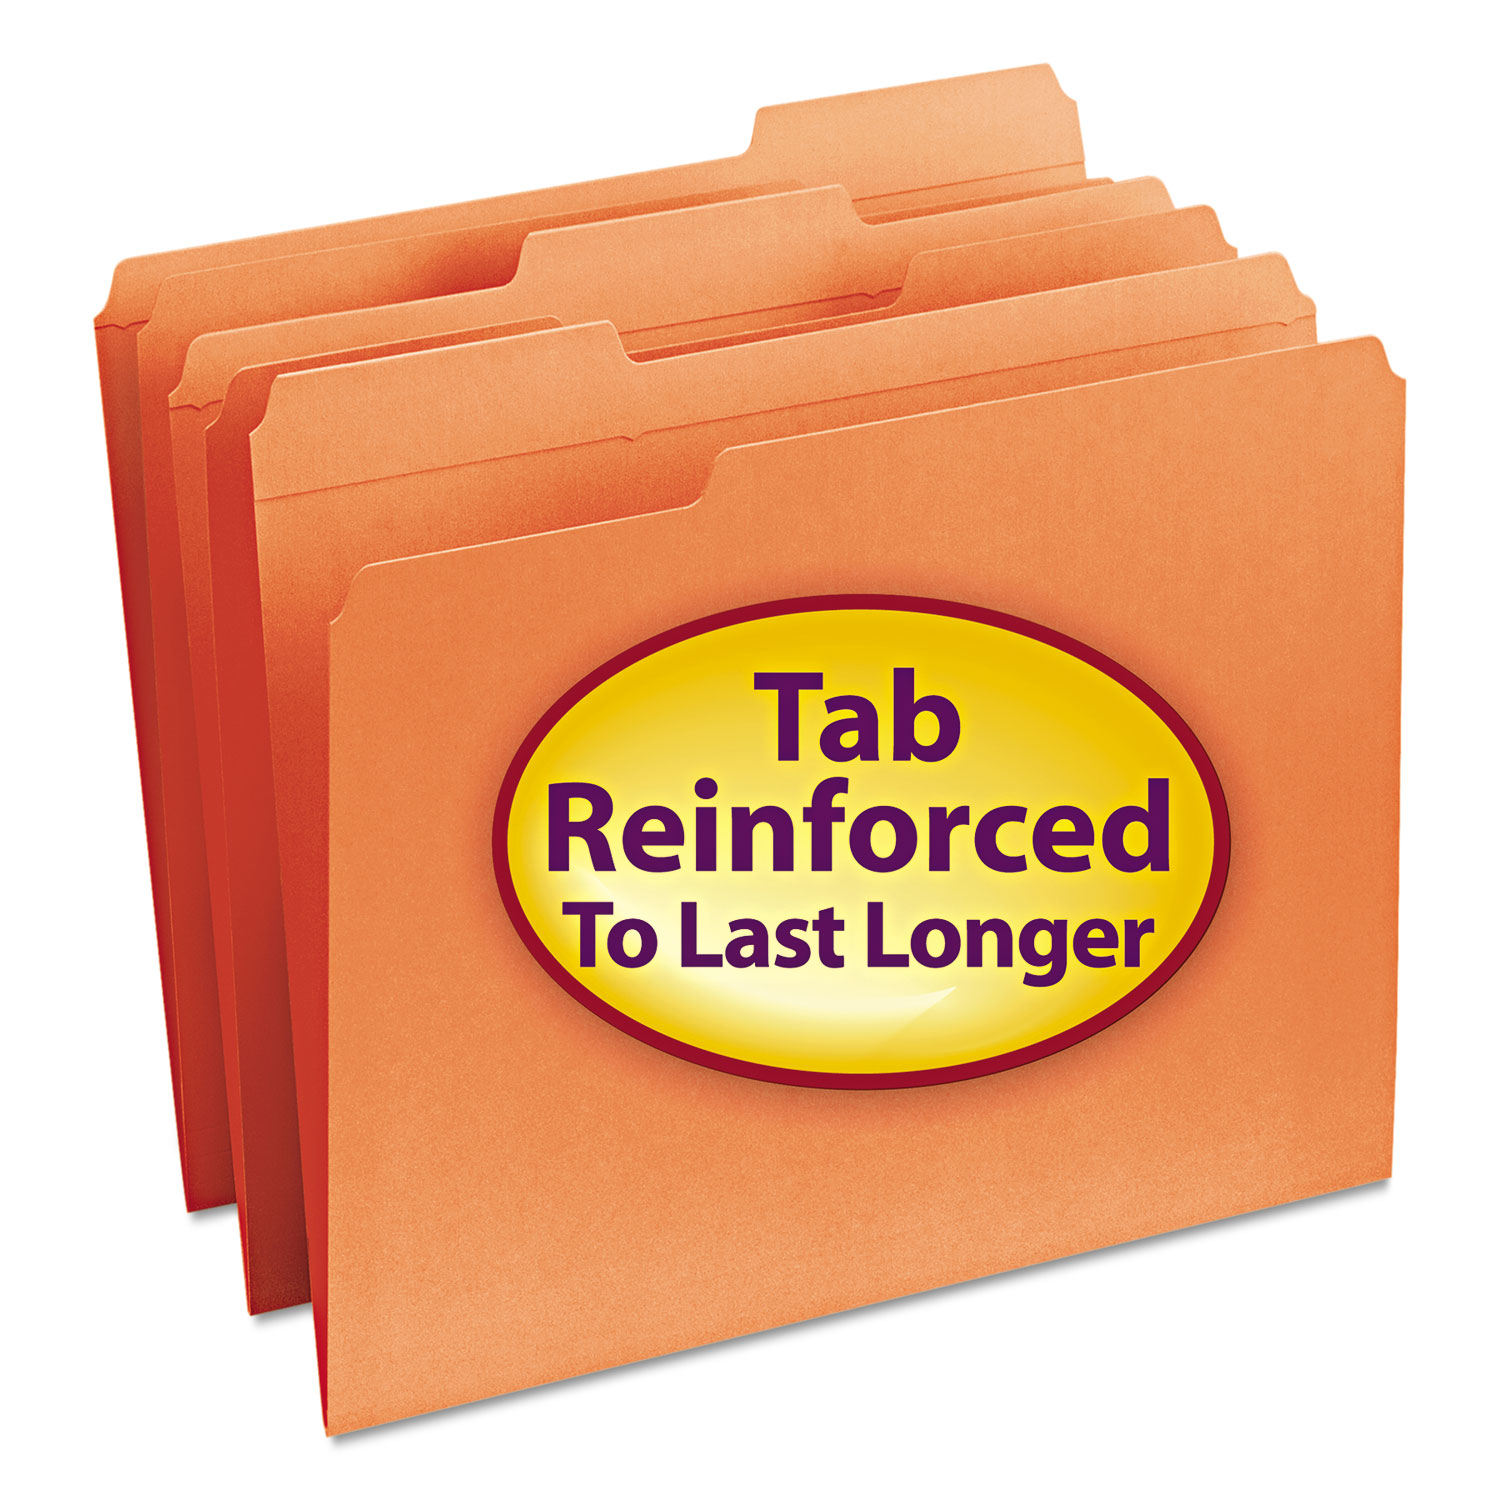  Smead 12534 Reinforced Top Tab Colored File Folders, 1/3-Cut Tabs, Letter Size, Orange, 100/Box (SMD12534) 